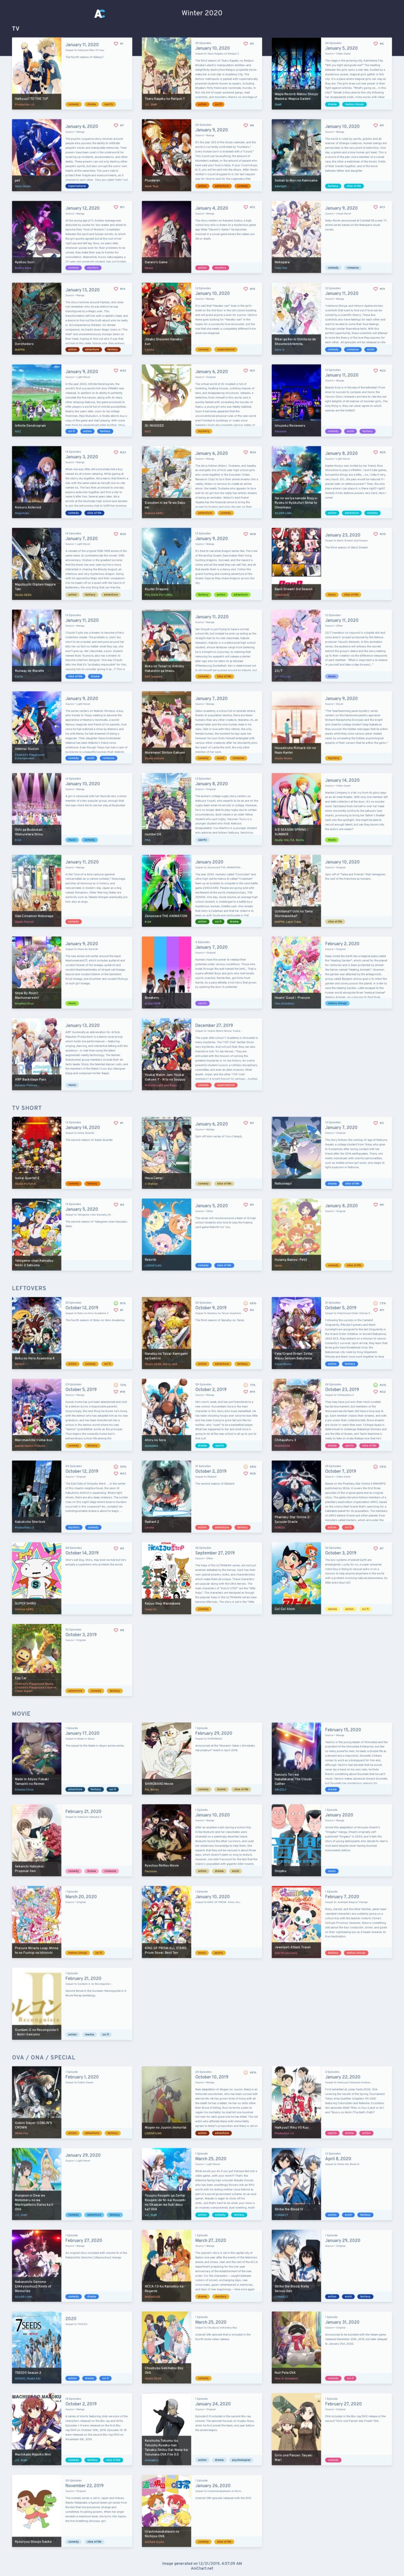 2020 Anime, Seasonal Chart